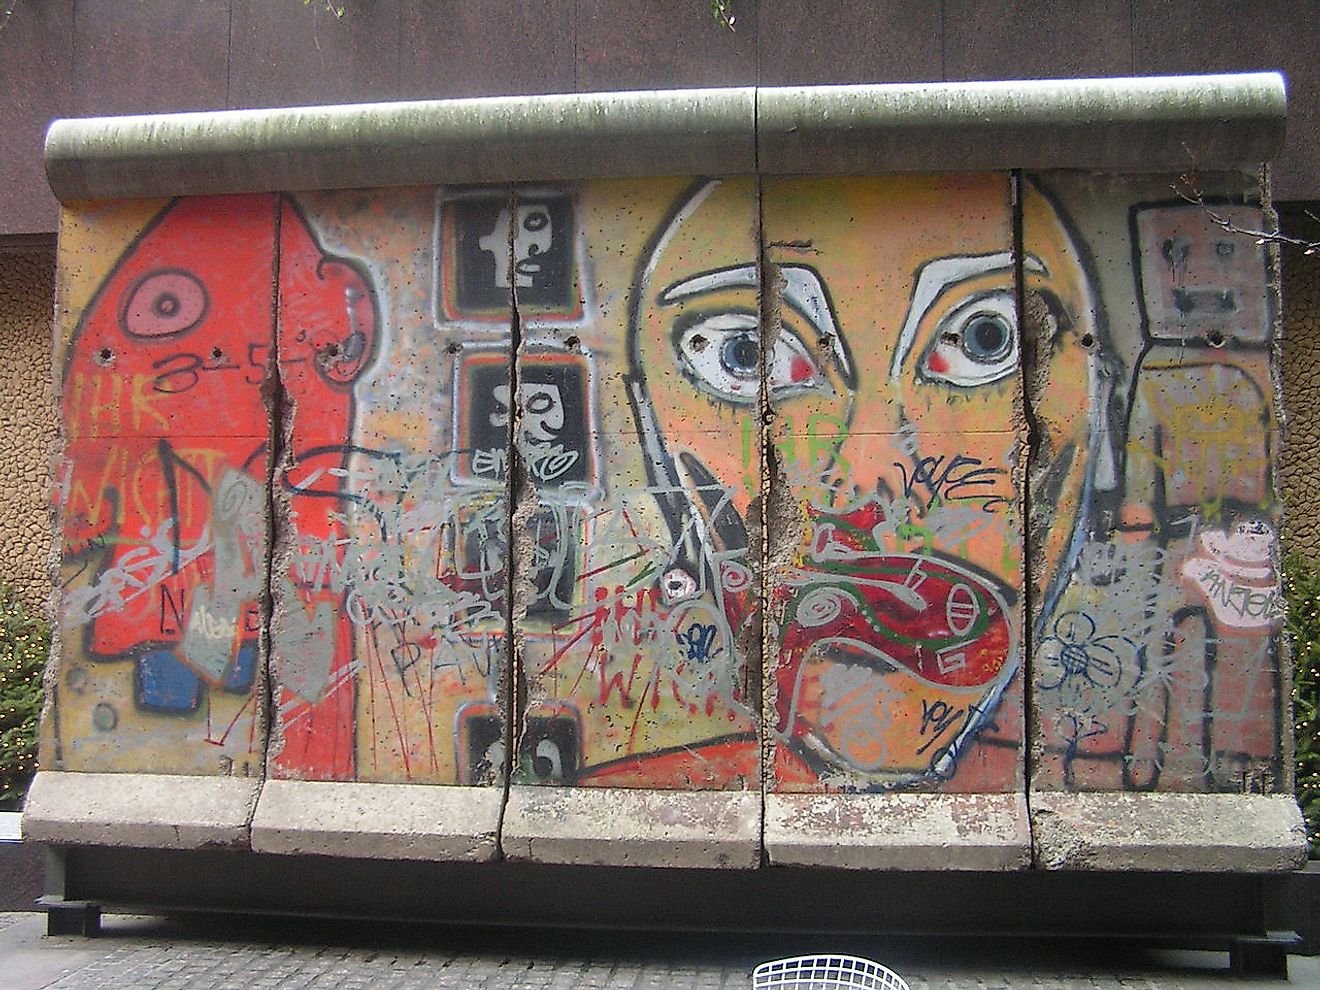 Segment of Berlin wall in New York City. Image credit: Ronny-Bonny/Wikimedia.org